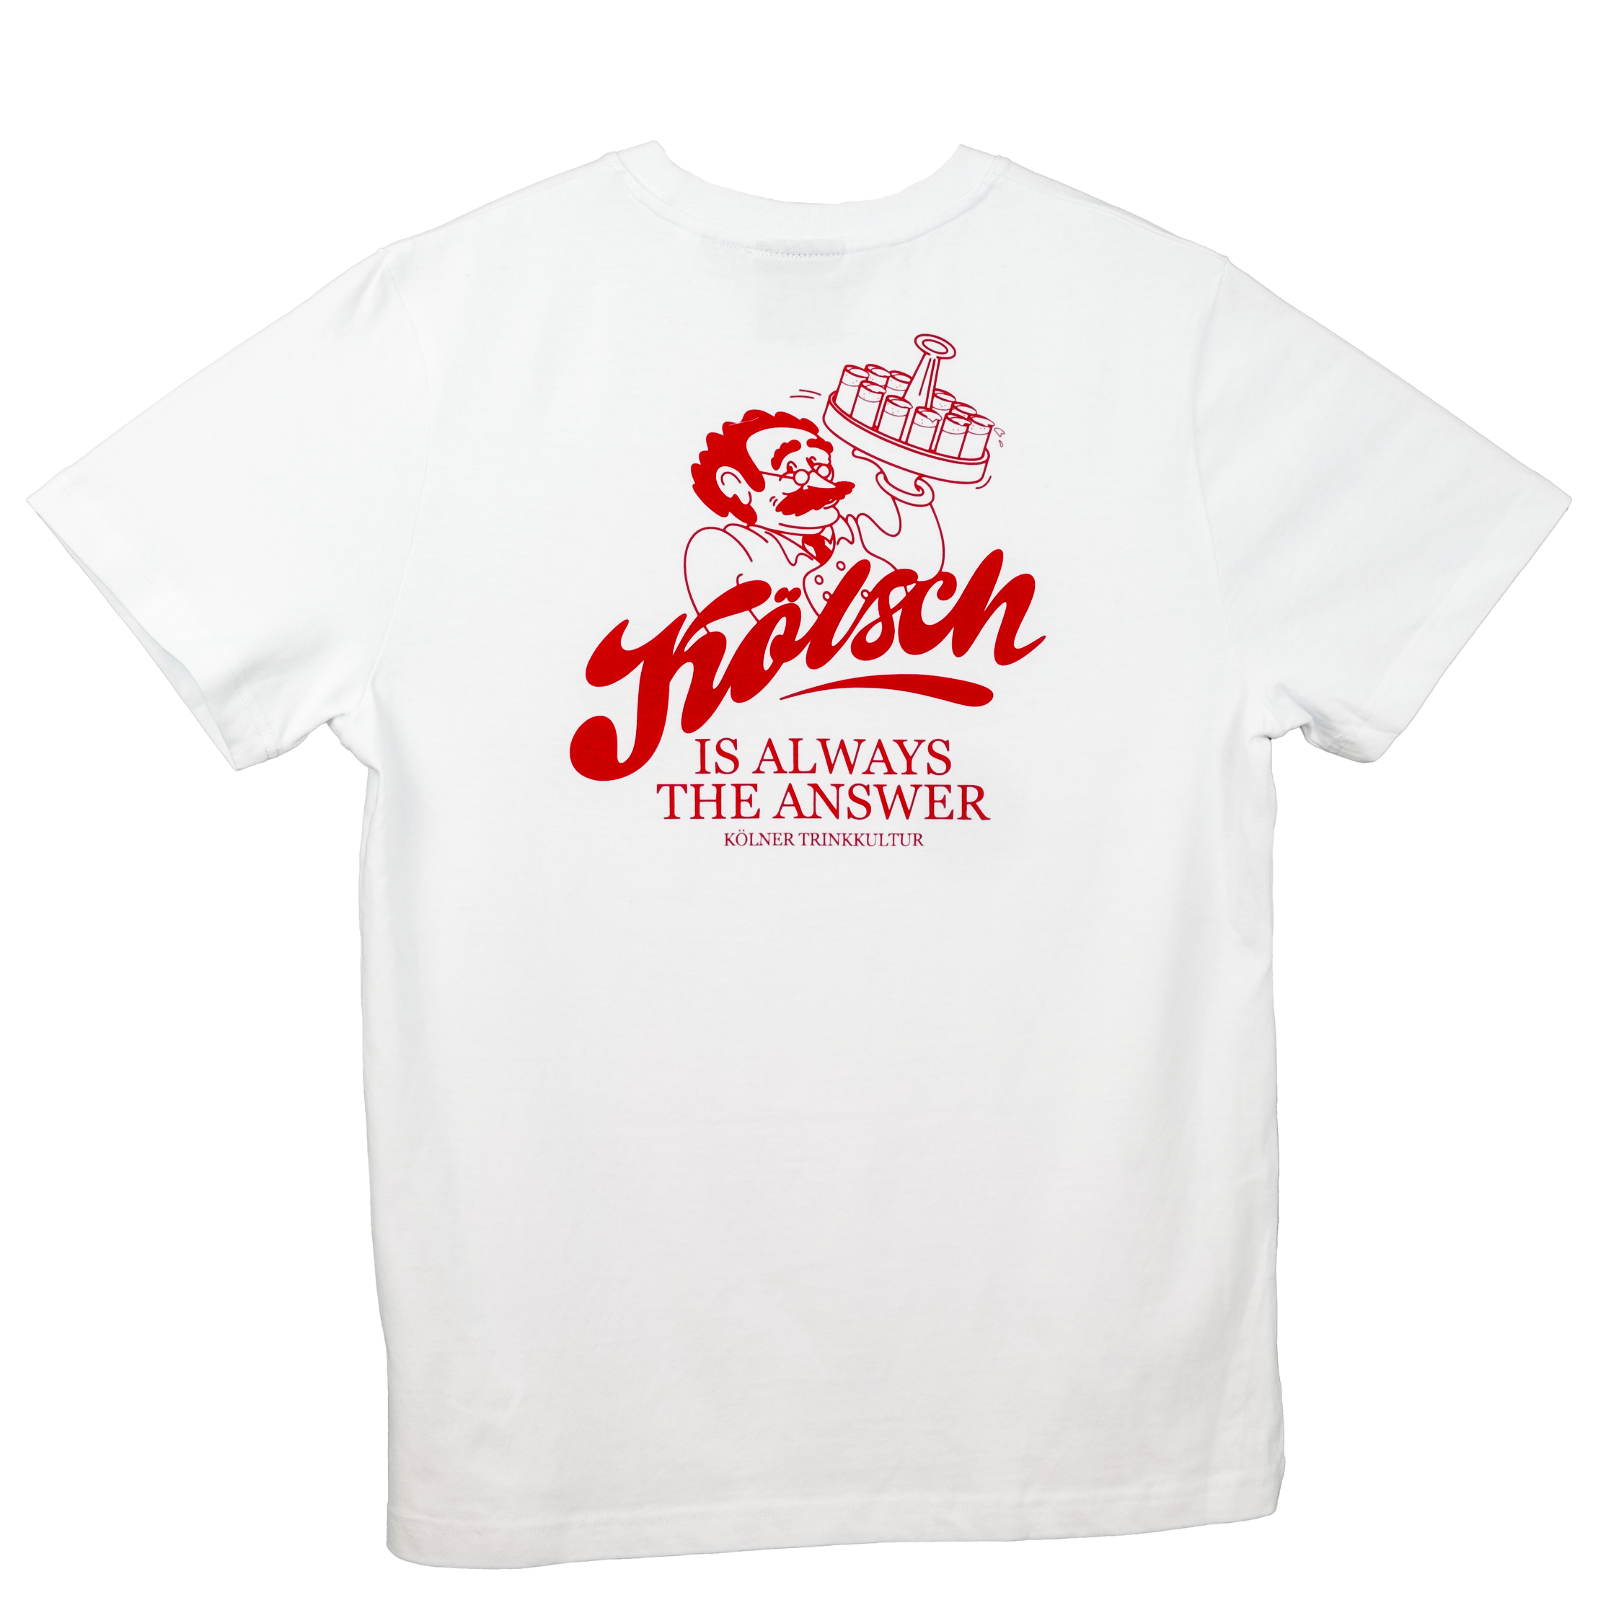 Kölsch is always the answer - Shirt